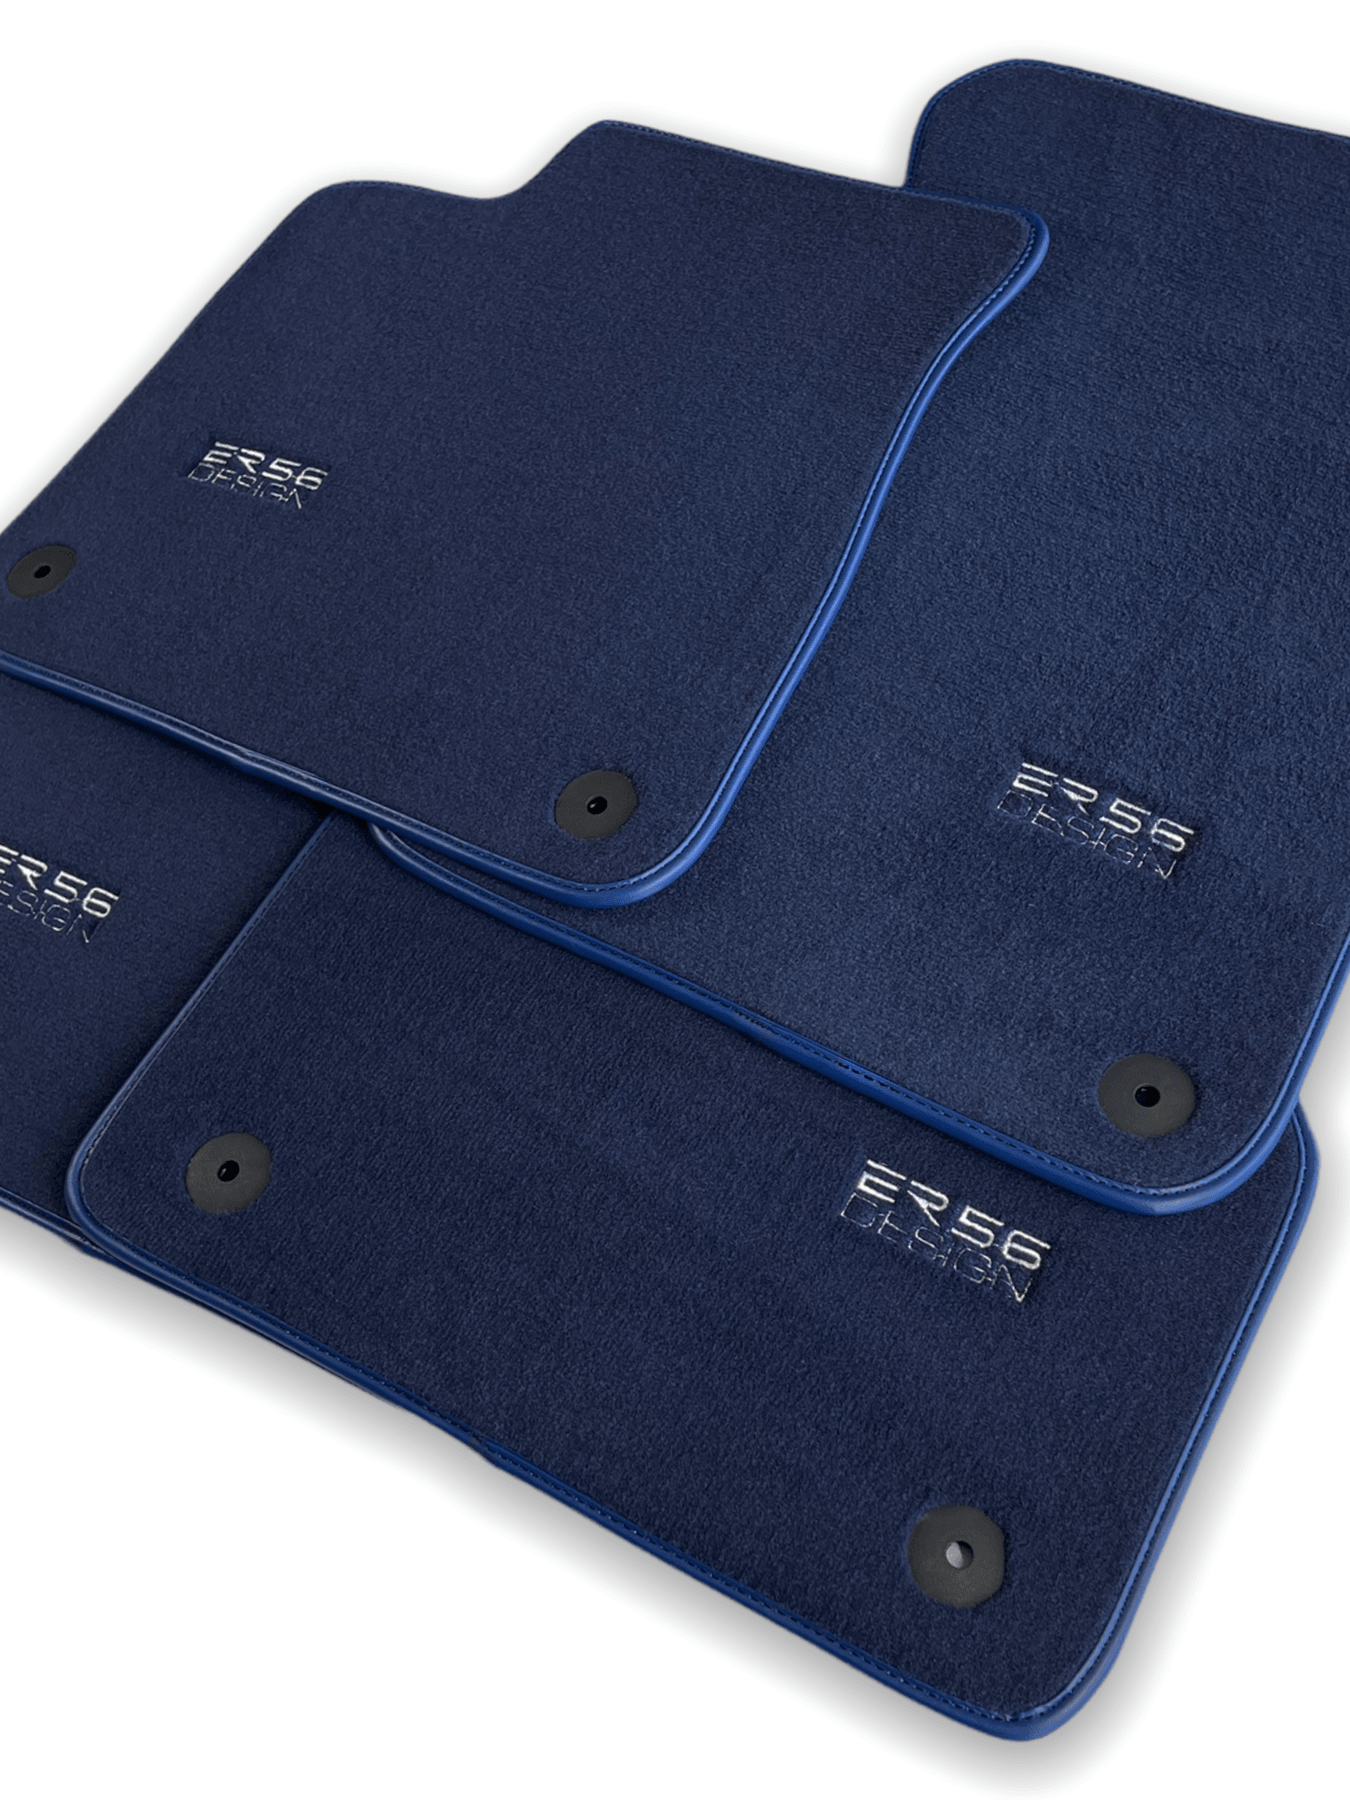 Dark Blue Floor Mats for Audi A3 - 3-door Hatchback (2013-2020) | ER56 Design